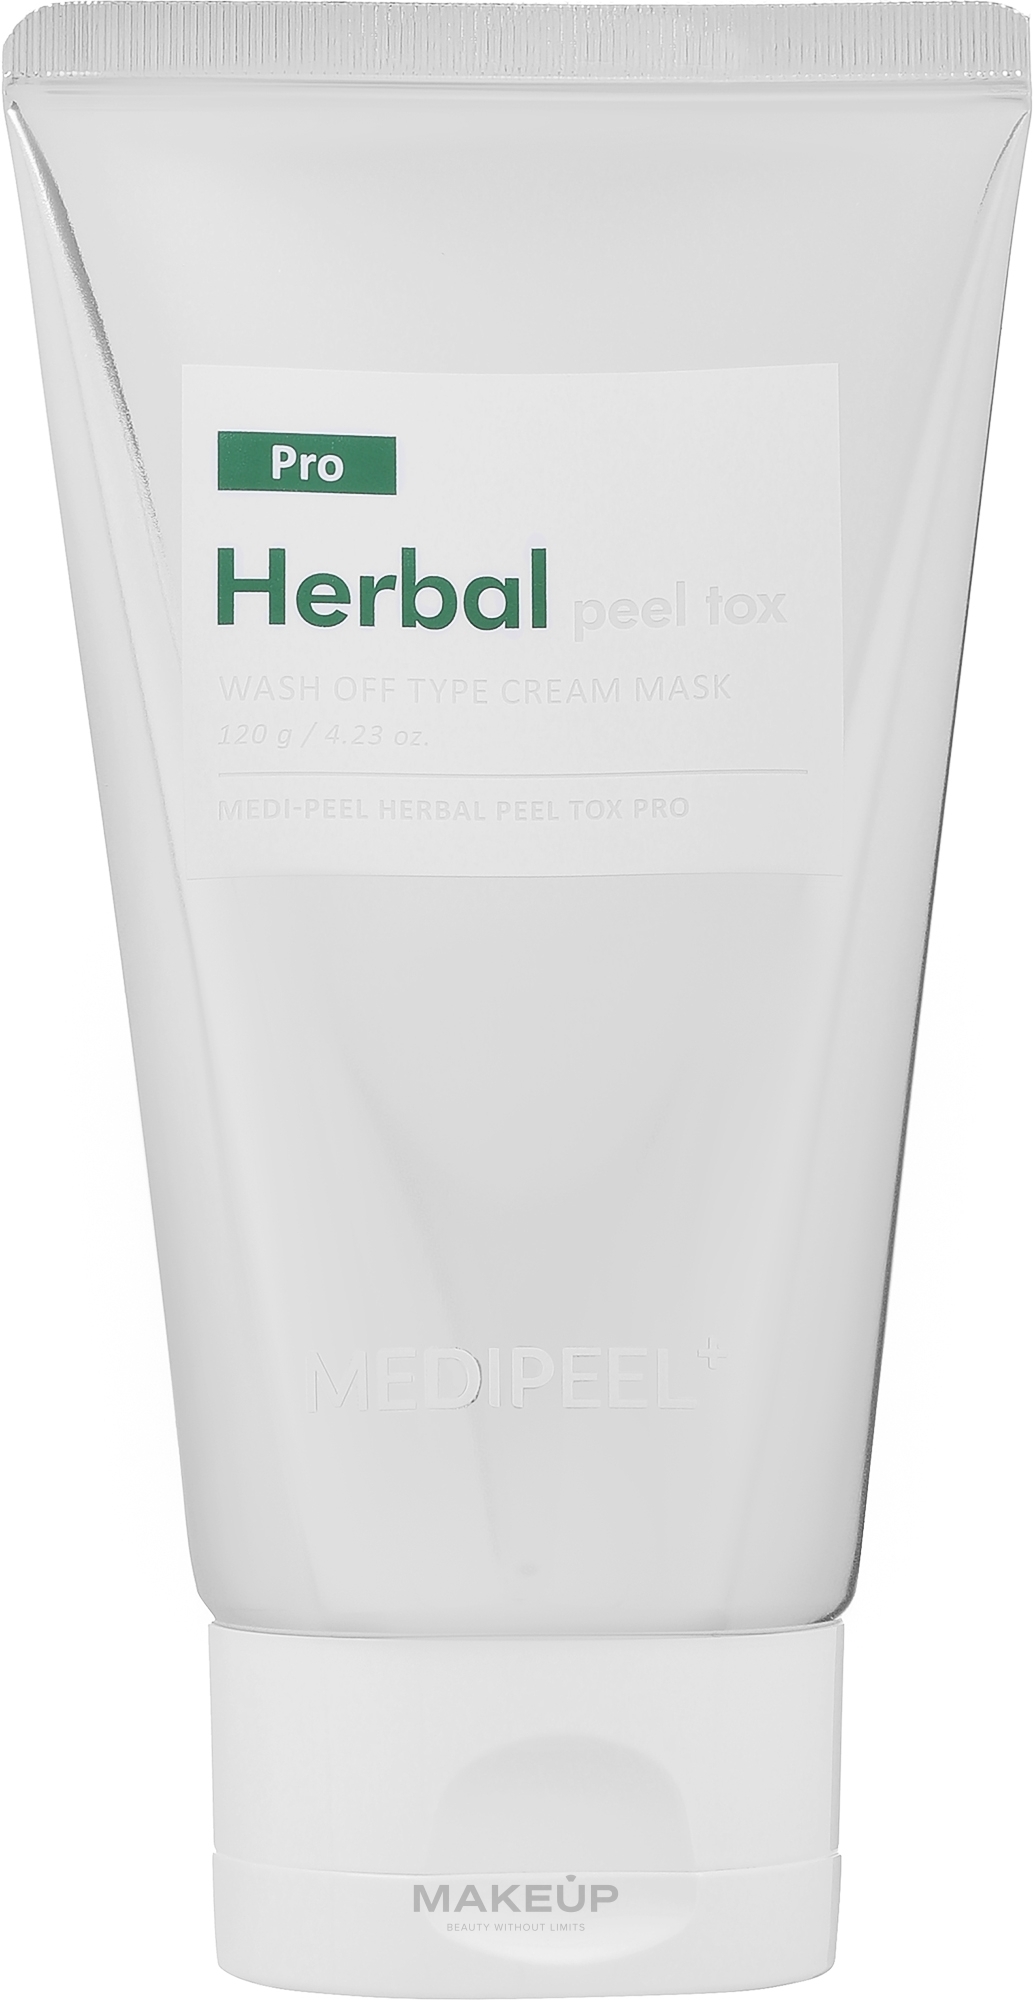 Успокаивающая пилинг-маска c эффектом детокса - MEDIPEEL Herbal Peel Tox Wash Off Type Cream Mask — фото 120g